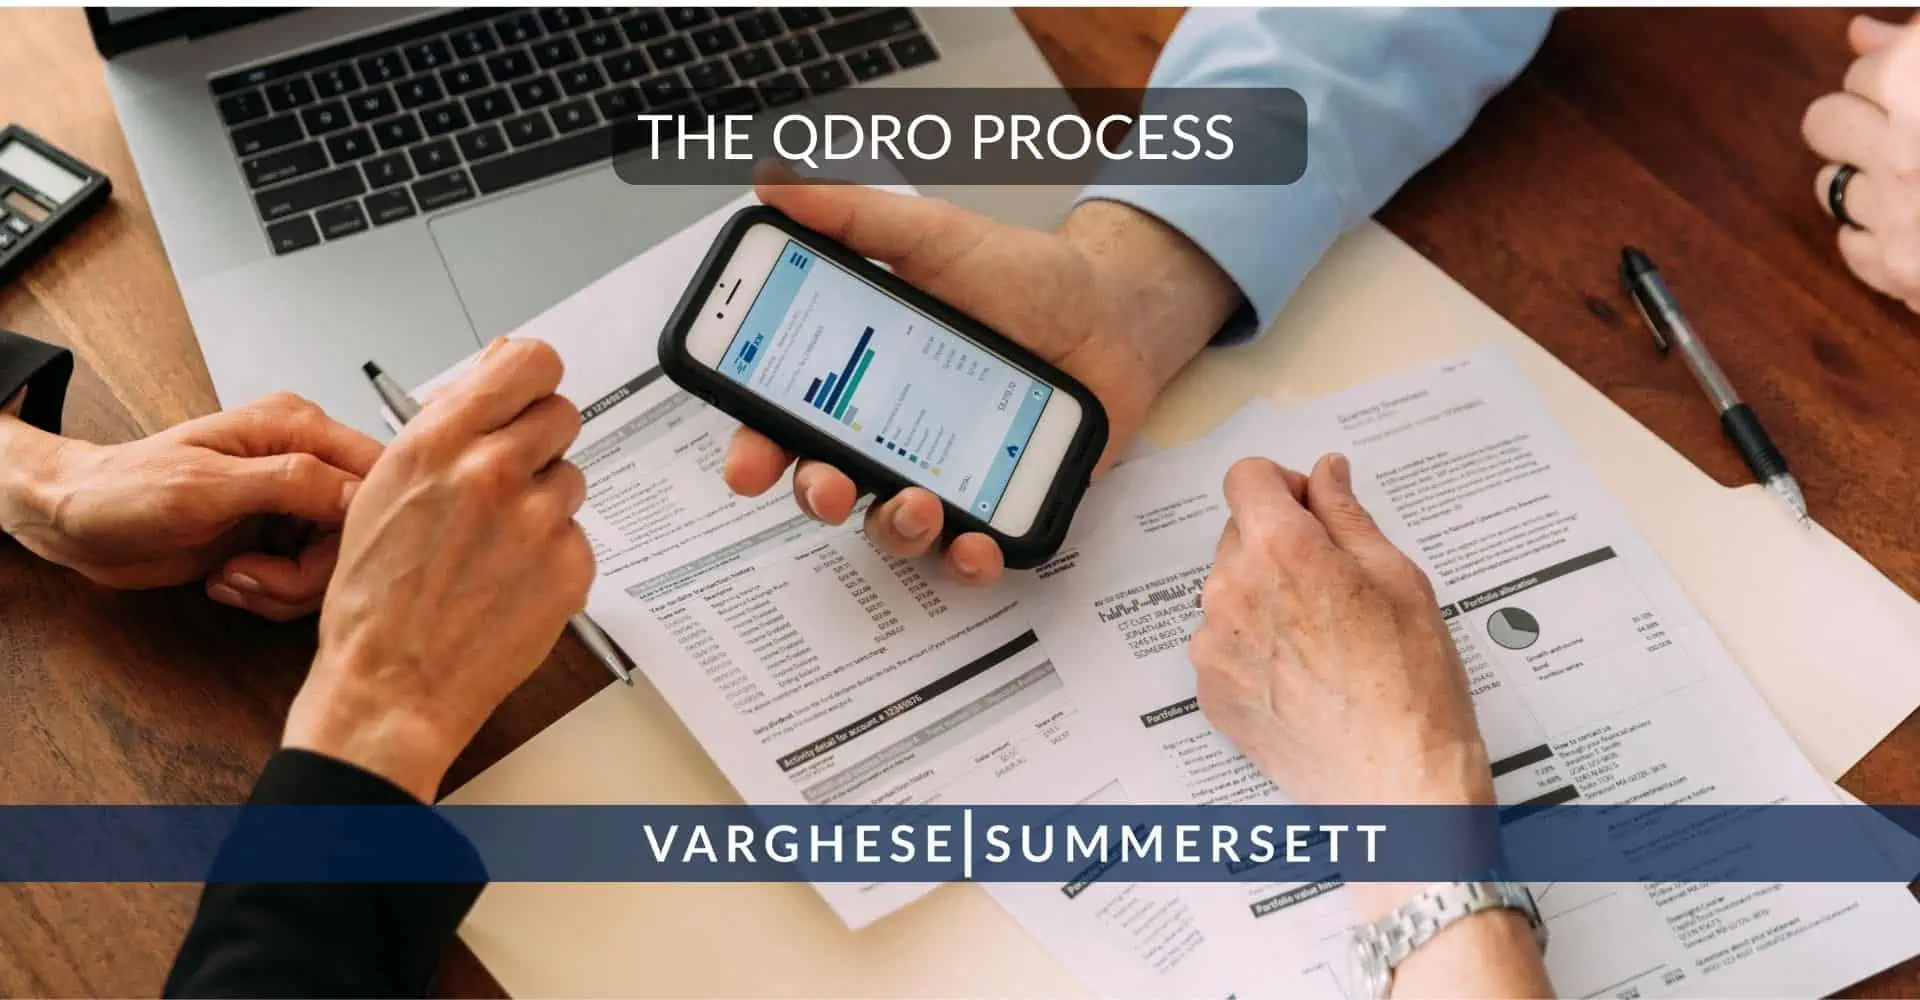 The QDRO Process